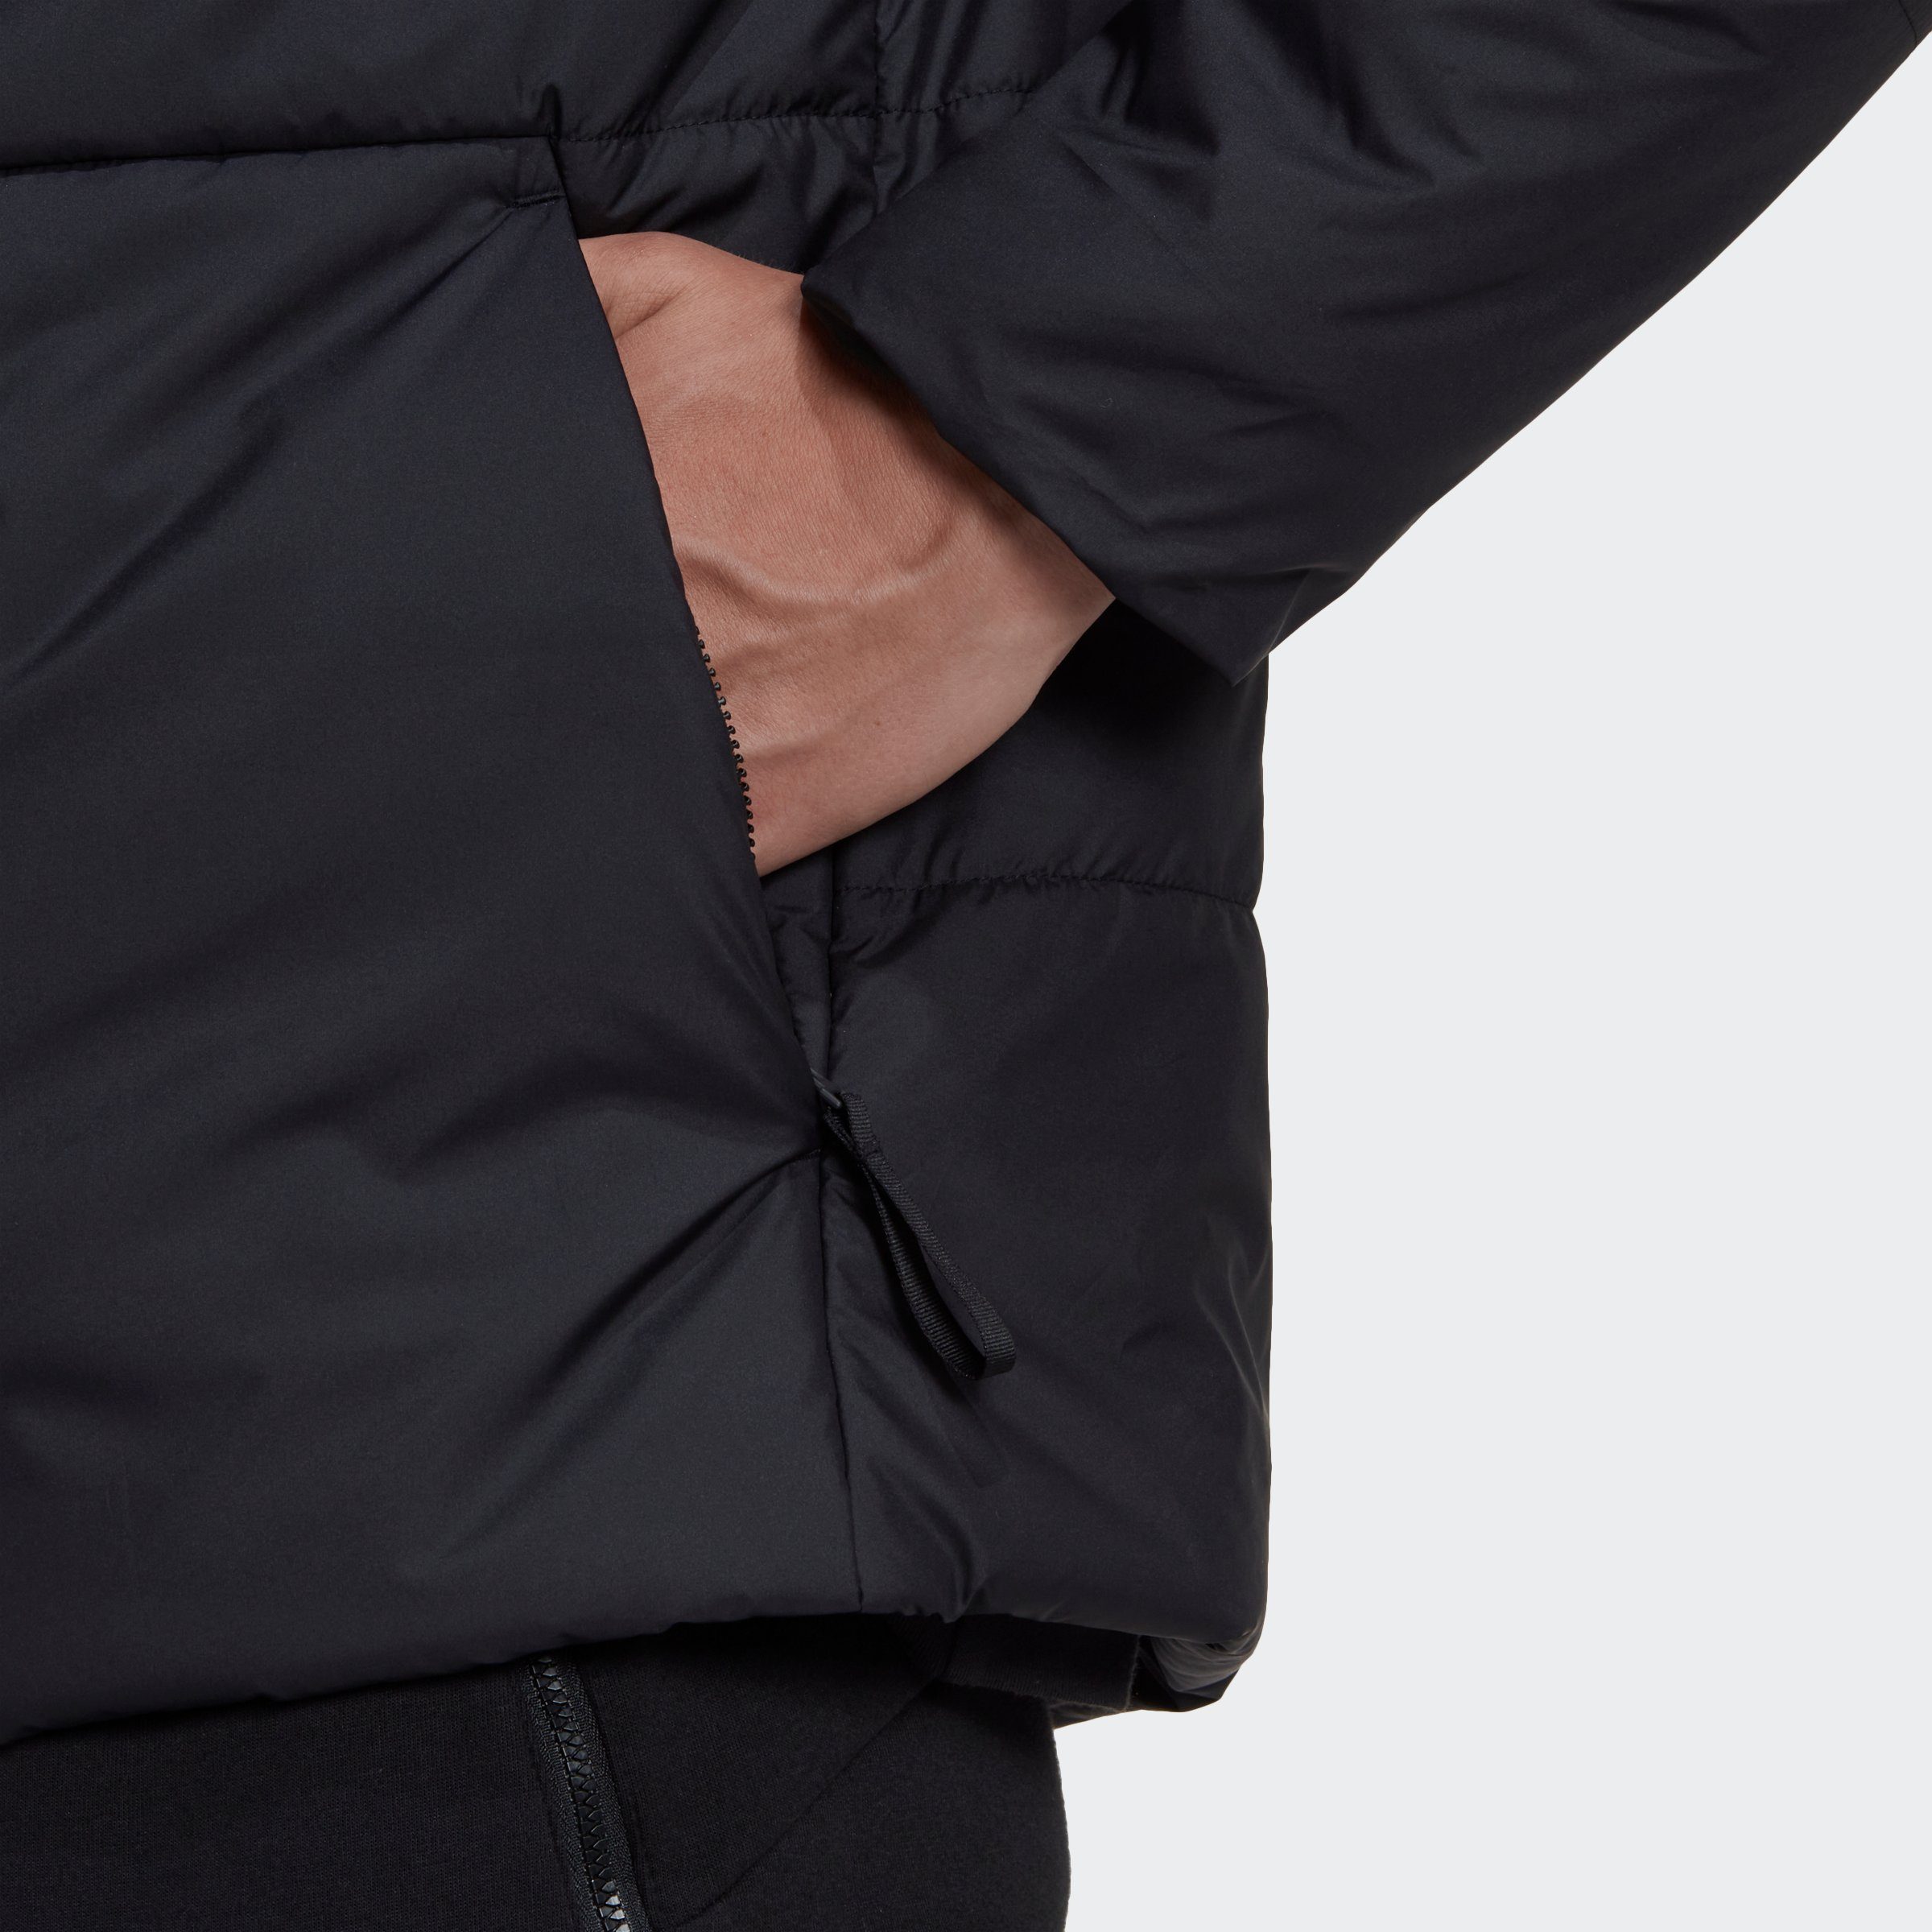 INSULATED HOODED Sportswear Outdoorjacke 3-STREIFEN schwarz adidas BSC